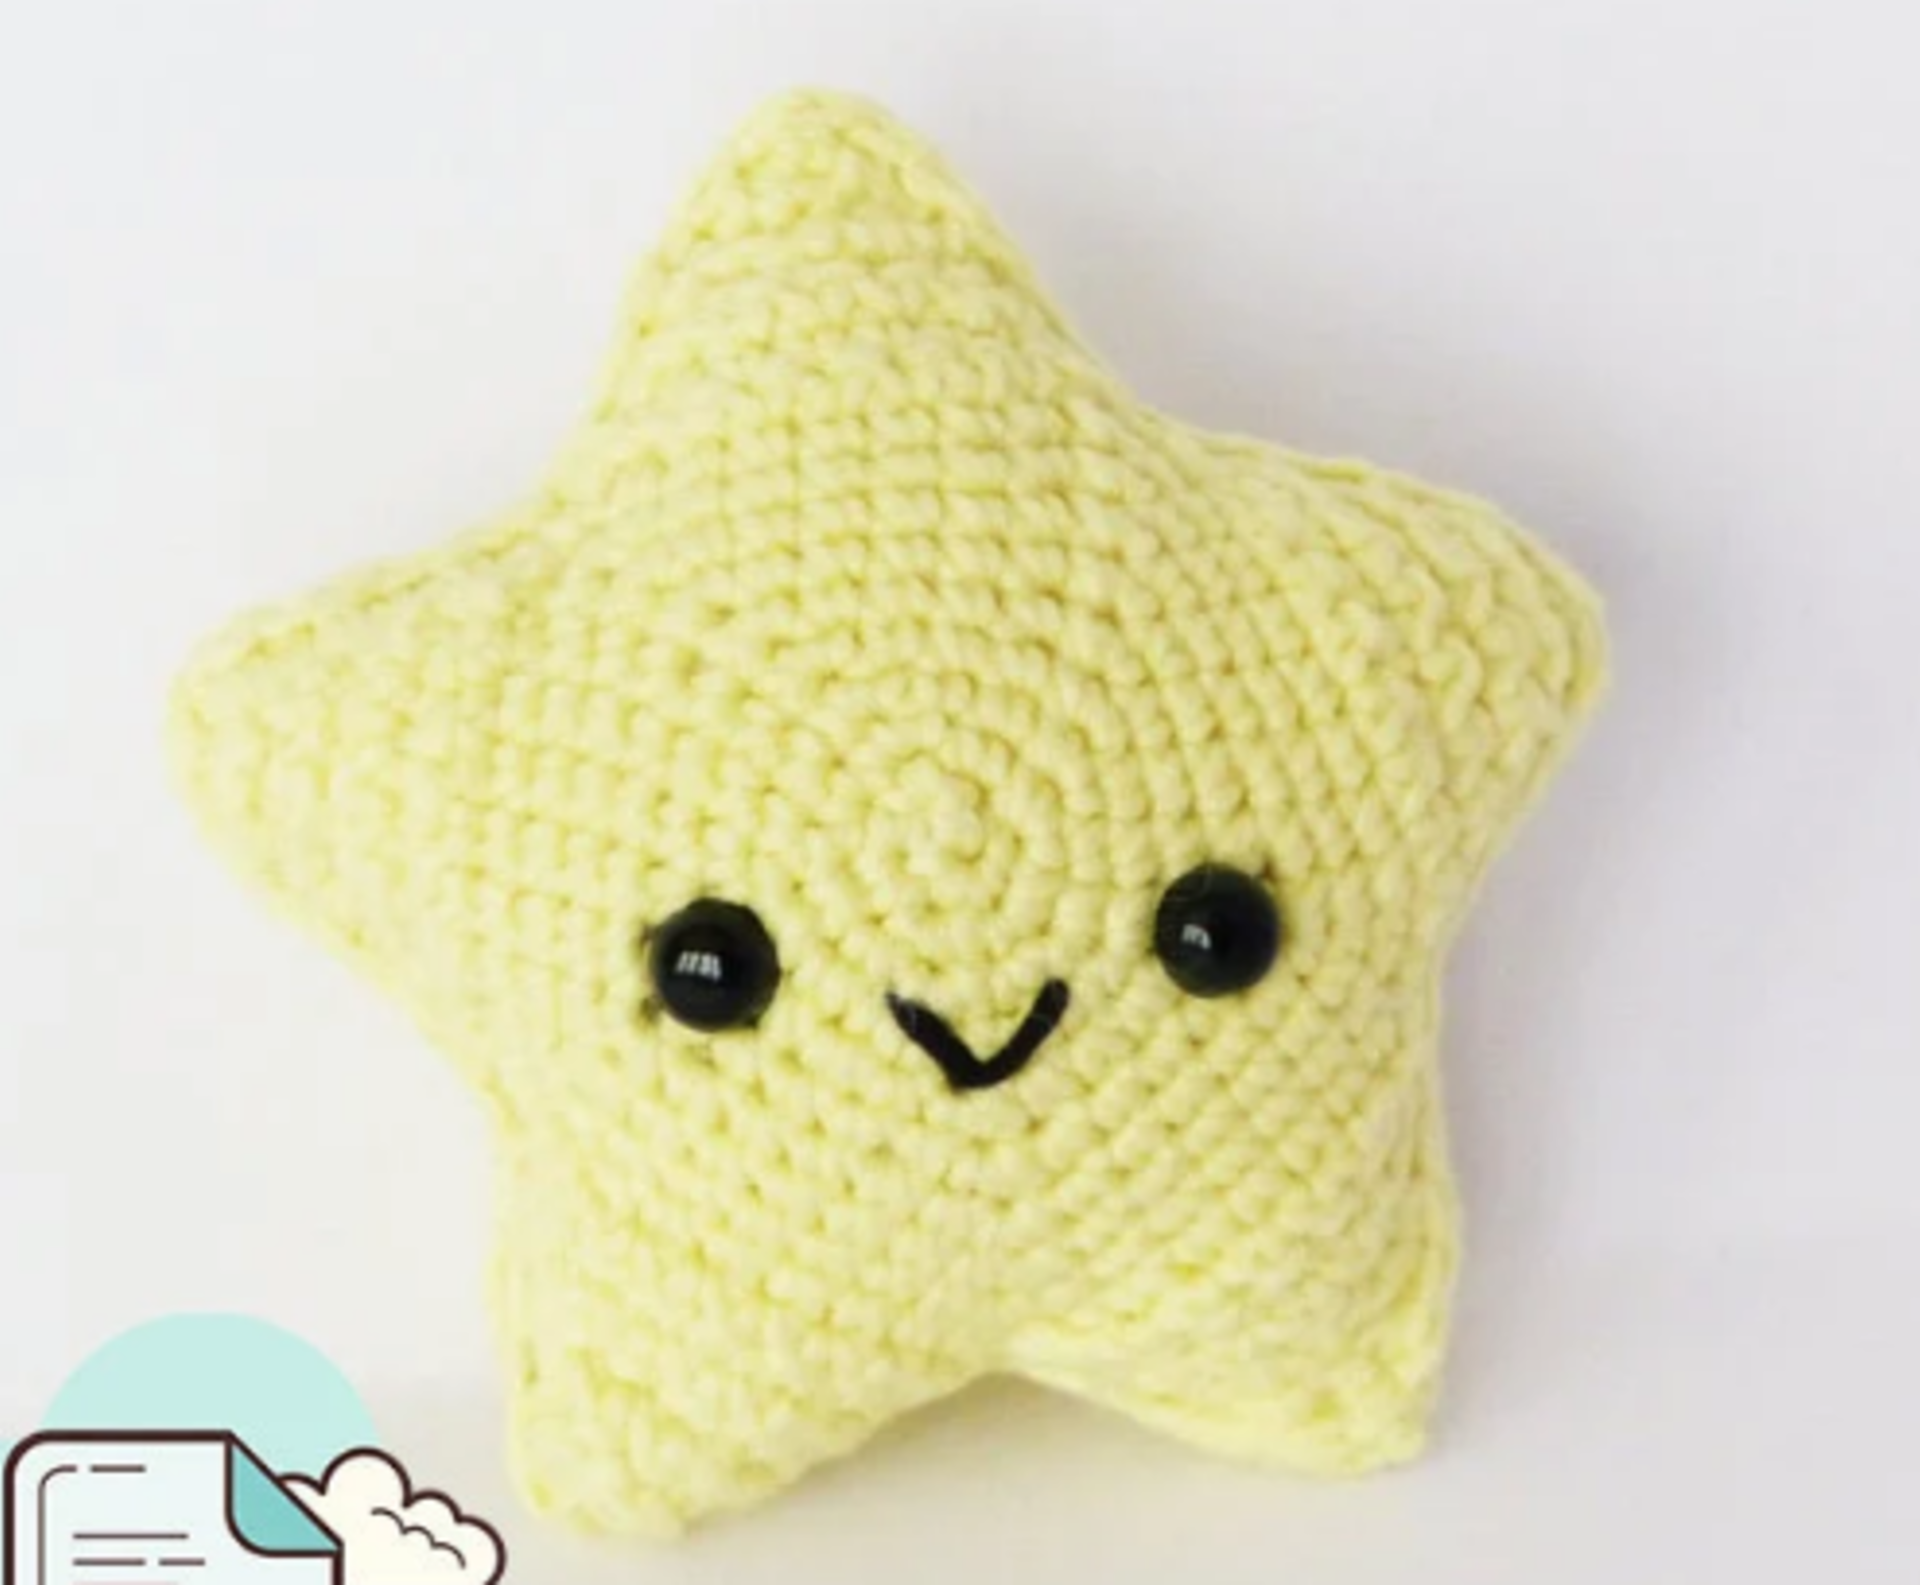 Crochet Star by AdrianaTeex3